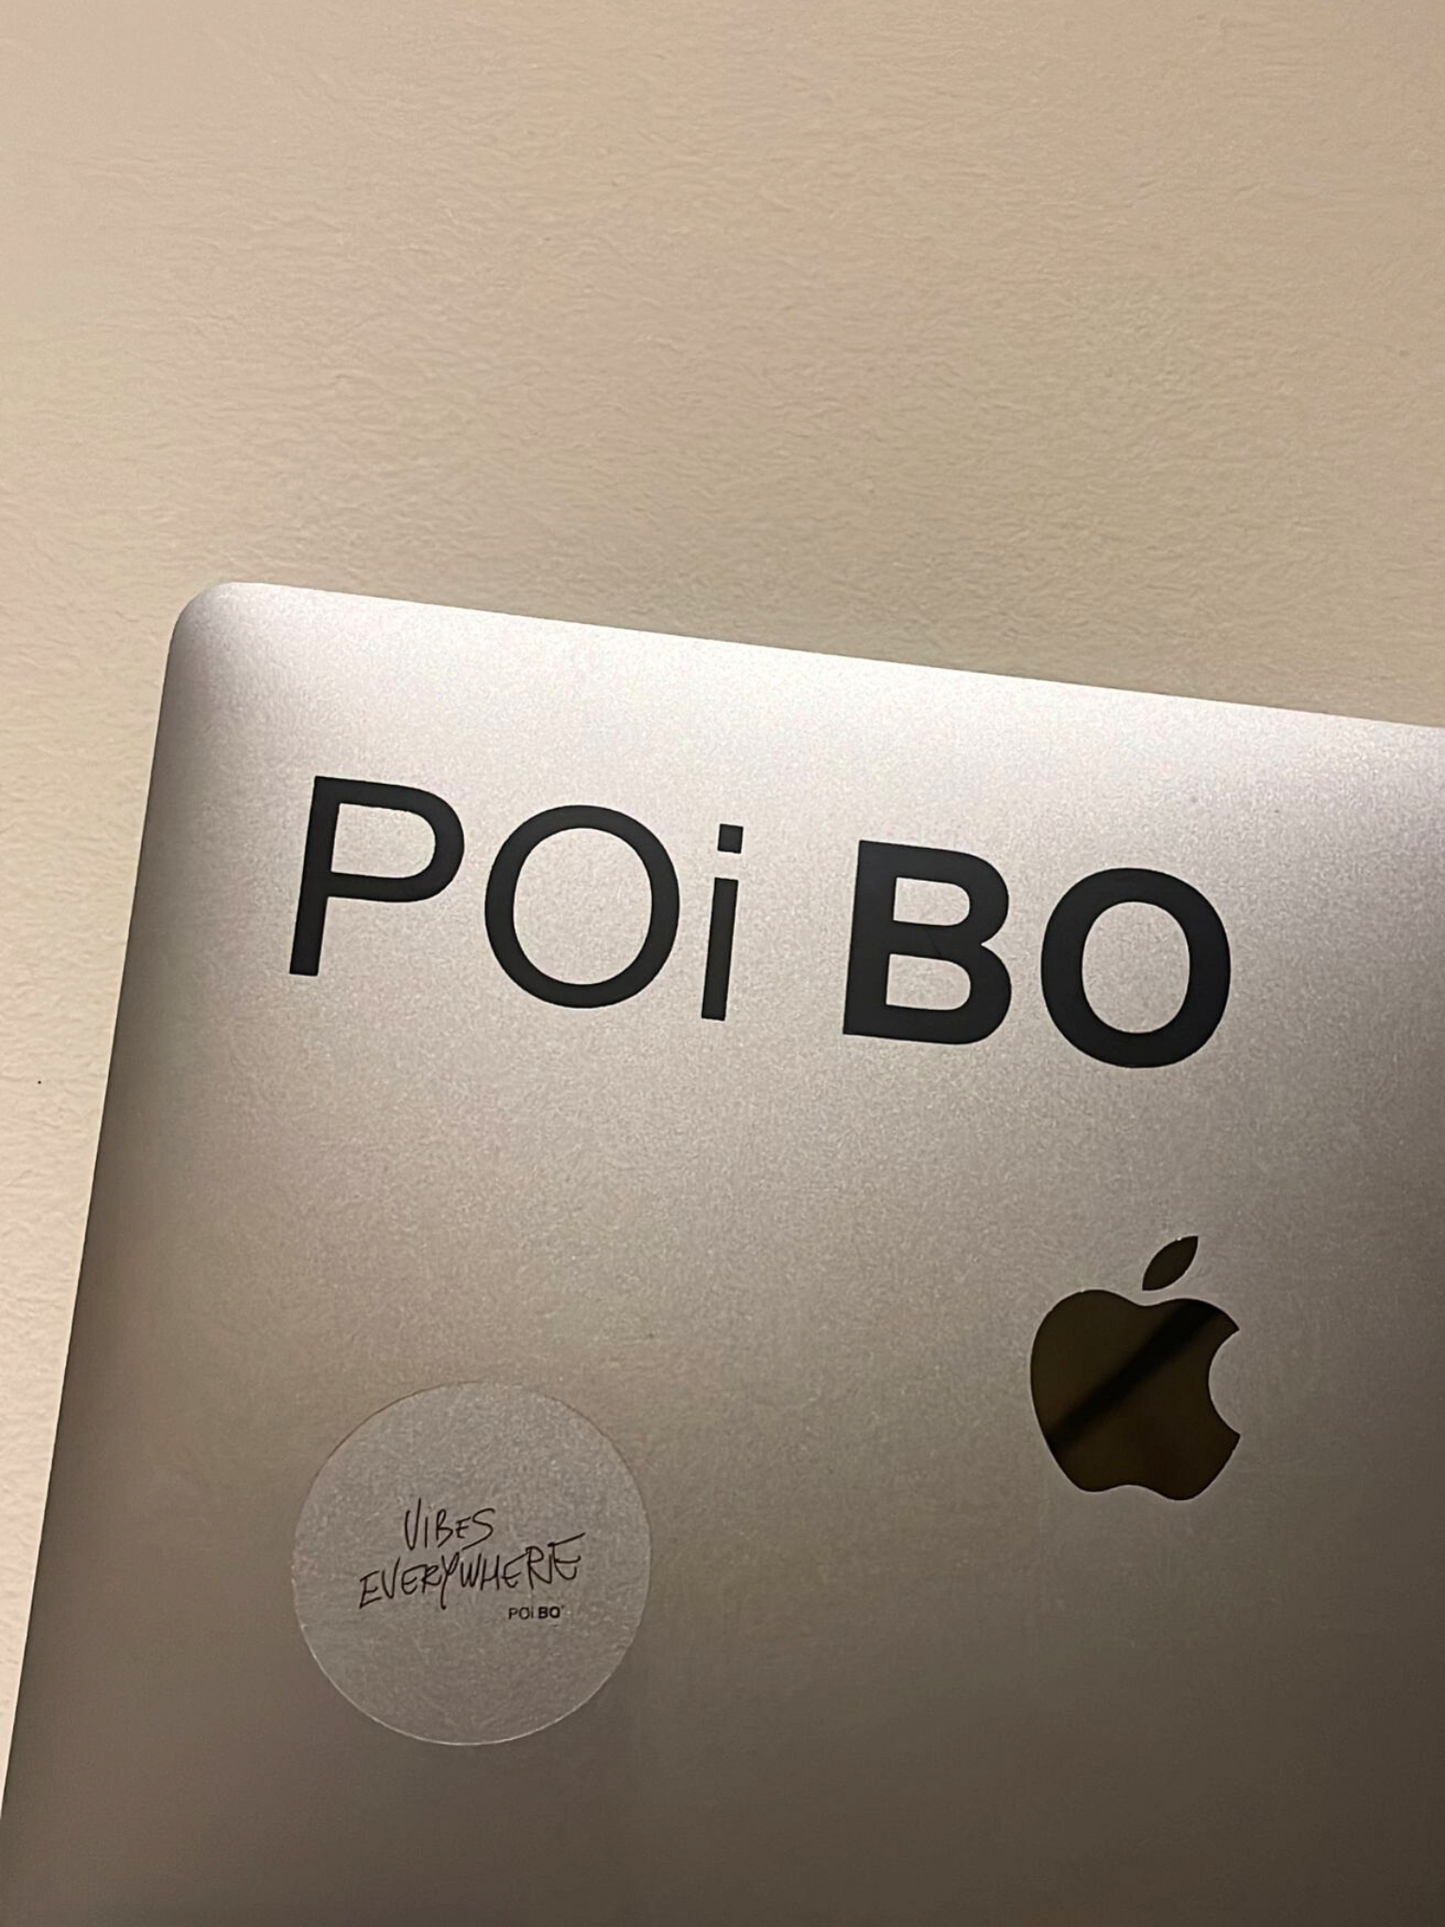 POi BO Transfer Sticker